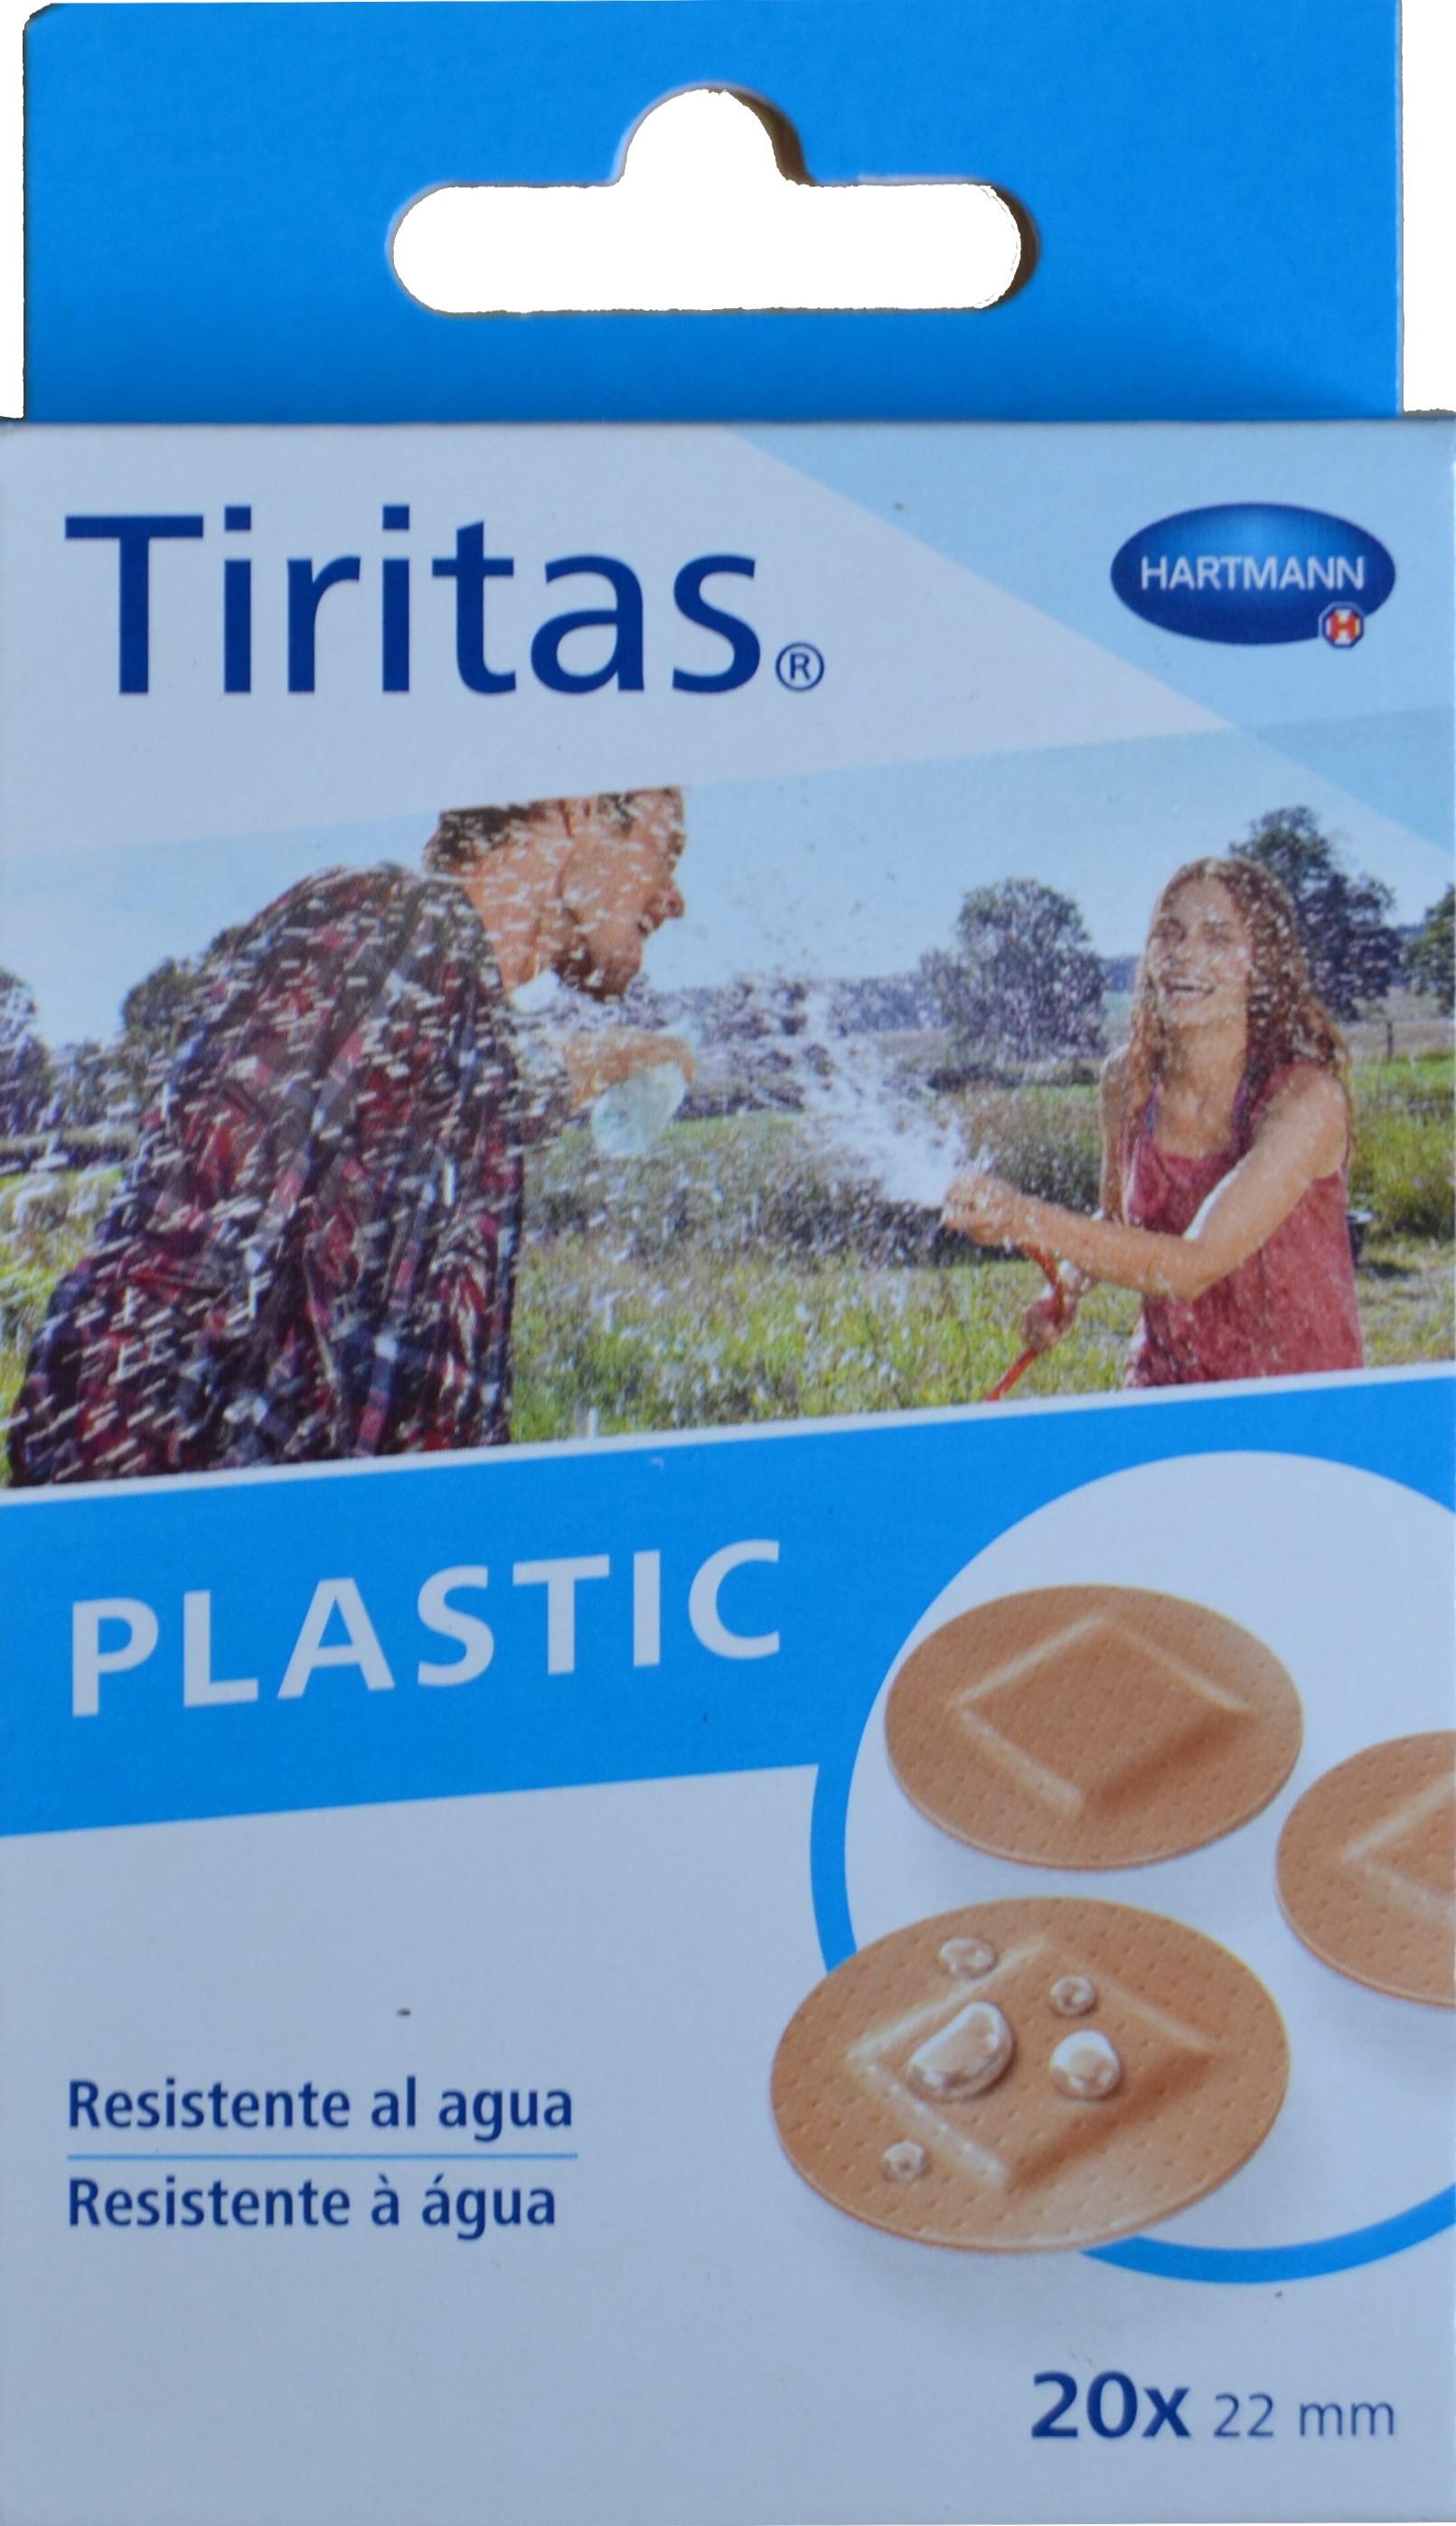 TIRITAS REDONDAS PLASTIC 20 U 20 X 22 MM HARTMANN - Farmacia Anna Riba